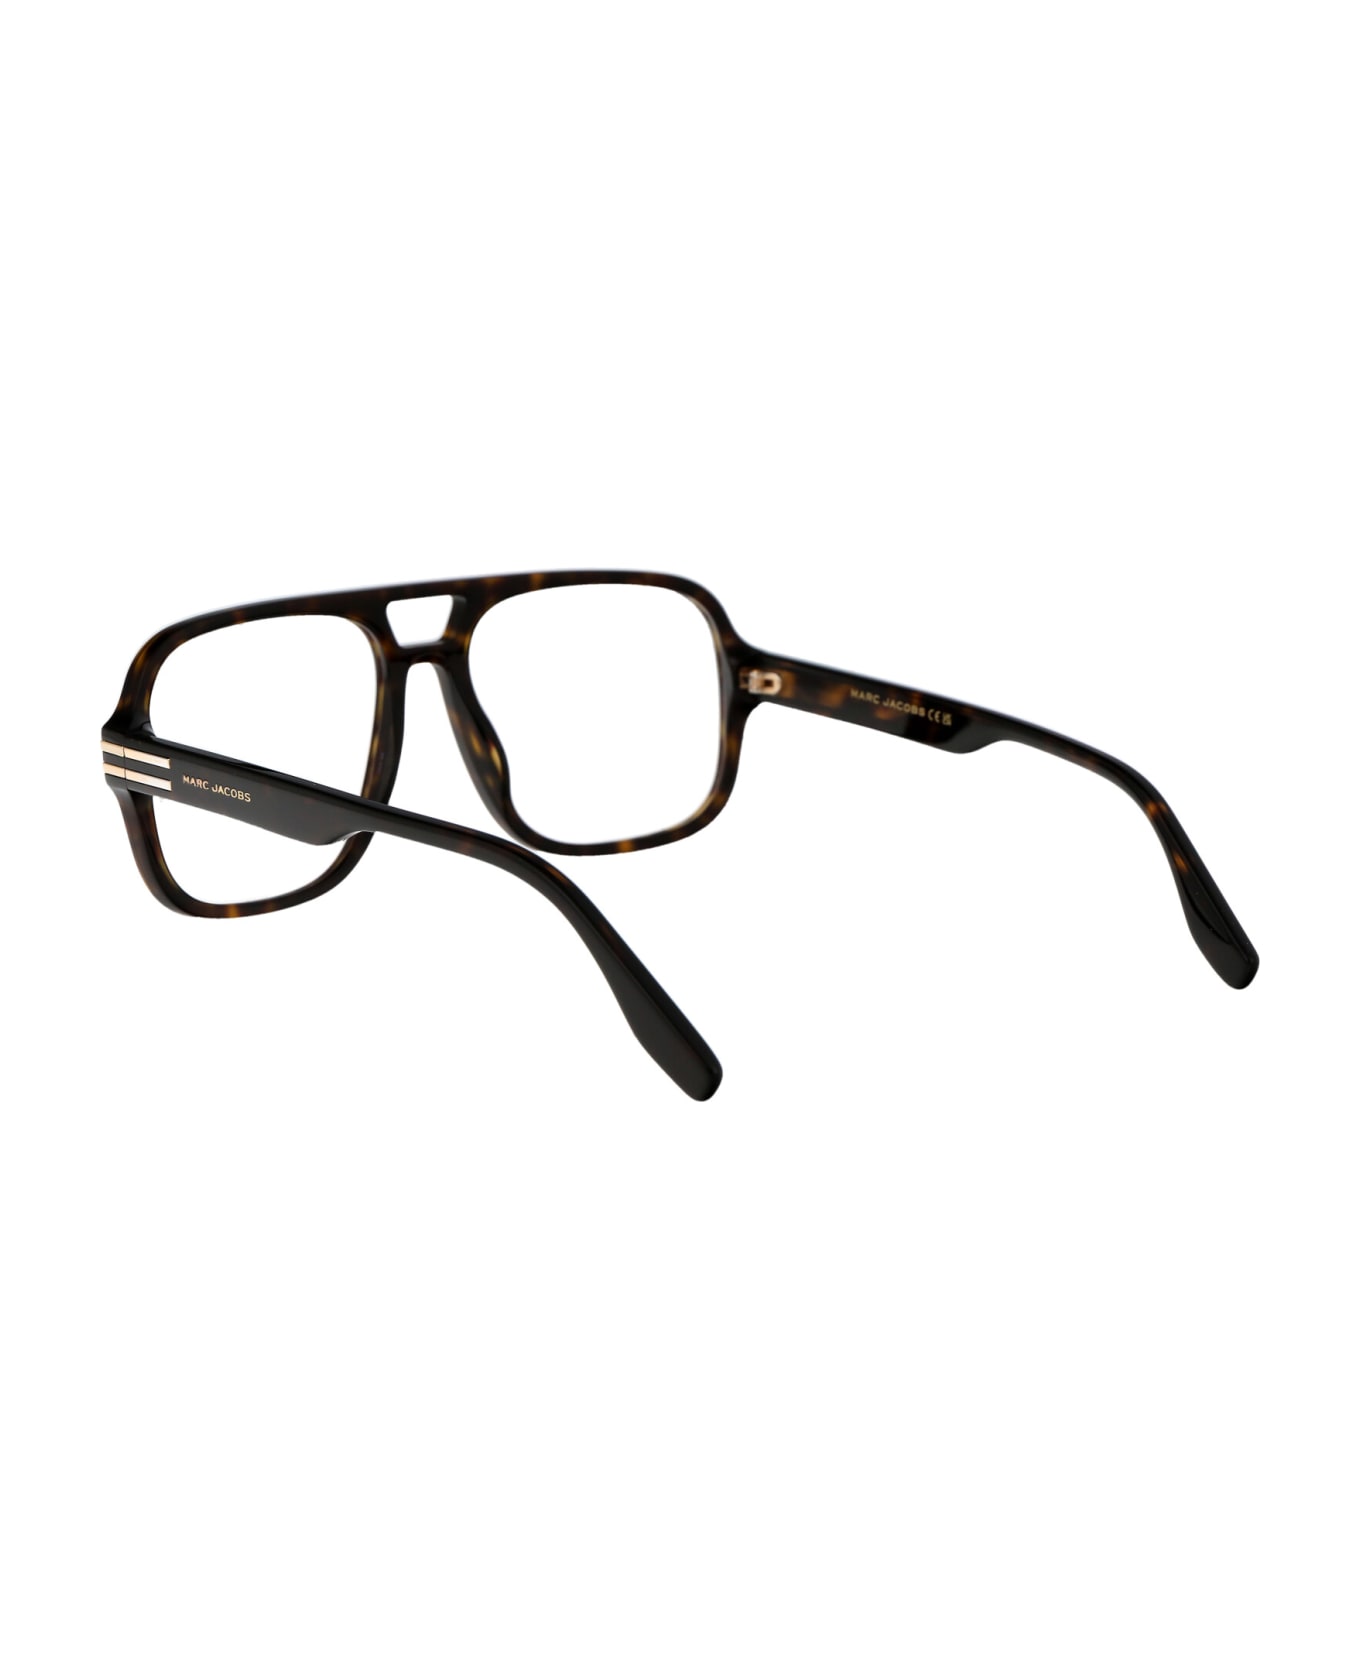 Marc Jacobs Eyewear Marc 755 Glasses - 086 HVN